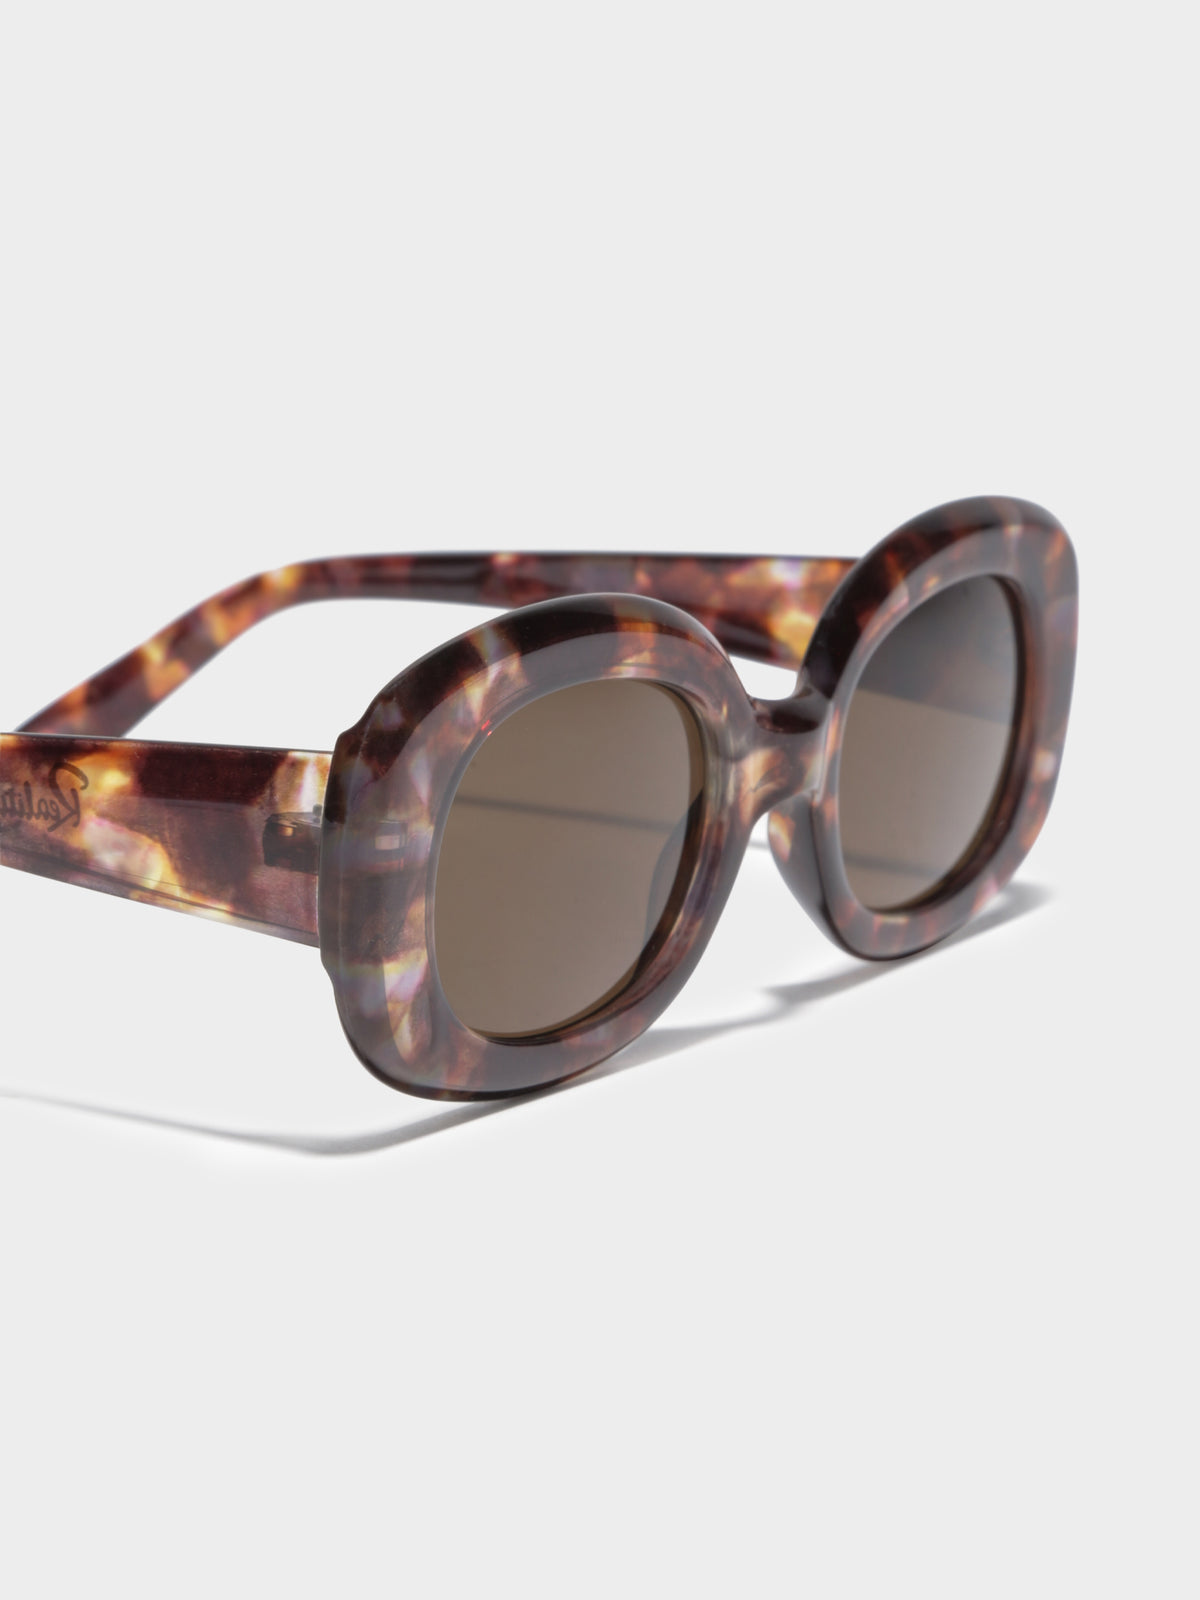 Lady Grandzigger Rectangular Sunglasses in Lilac Turtle